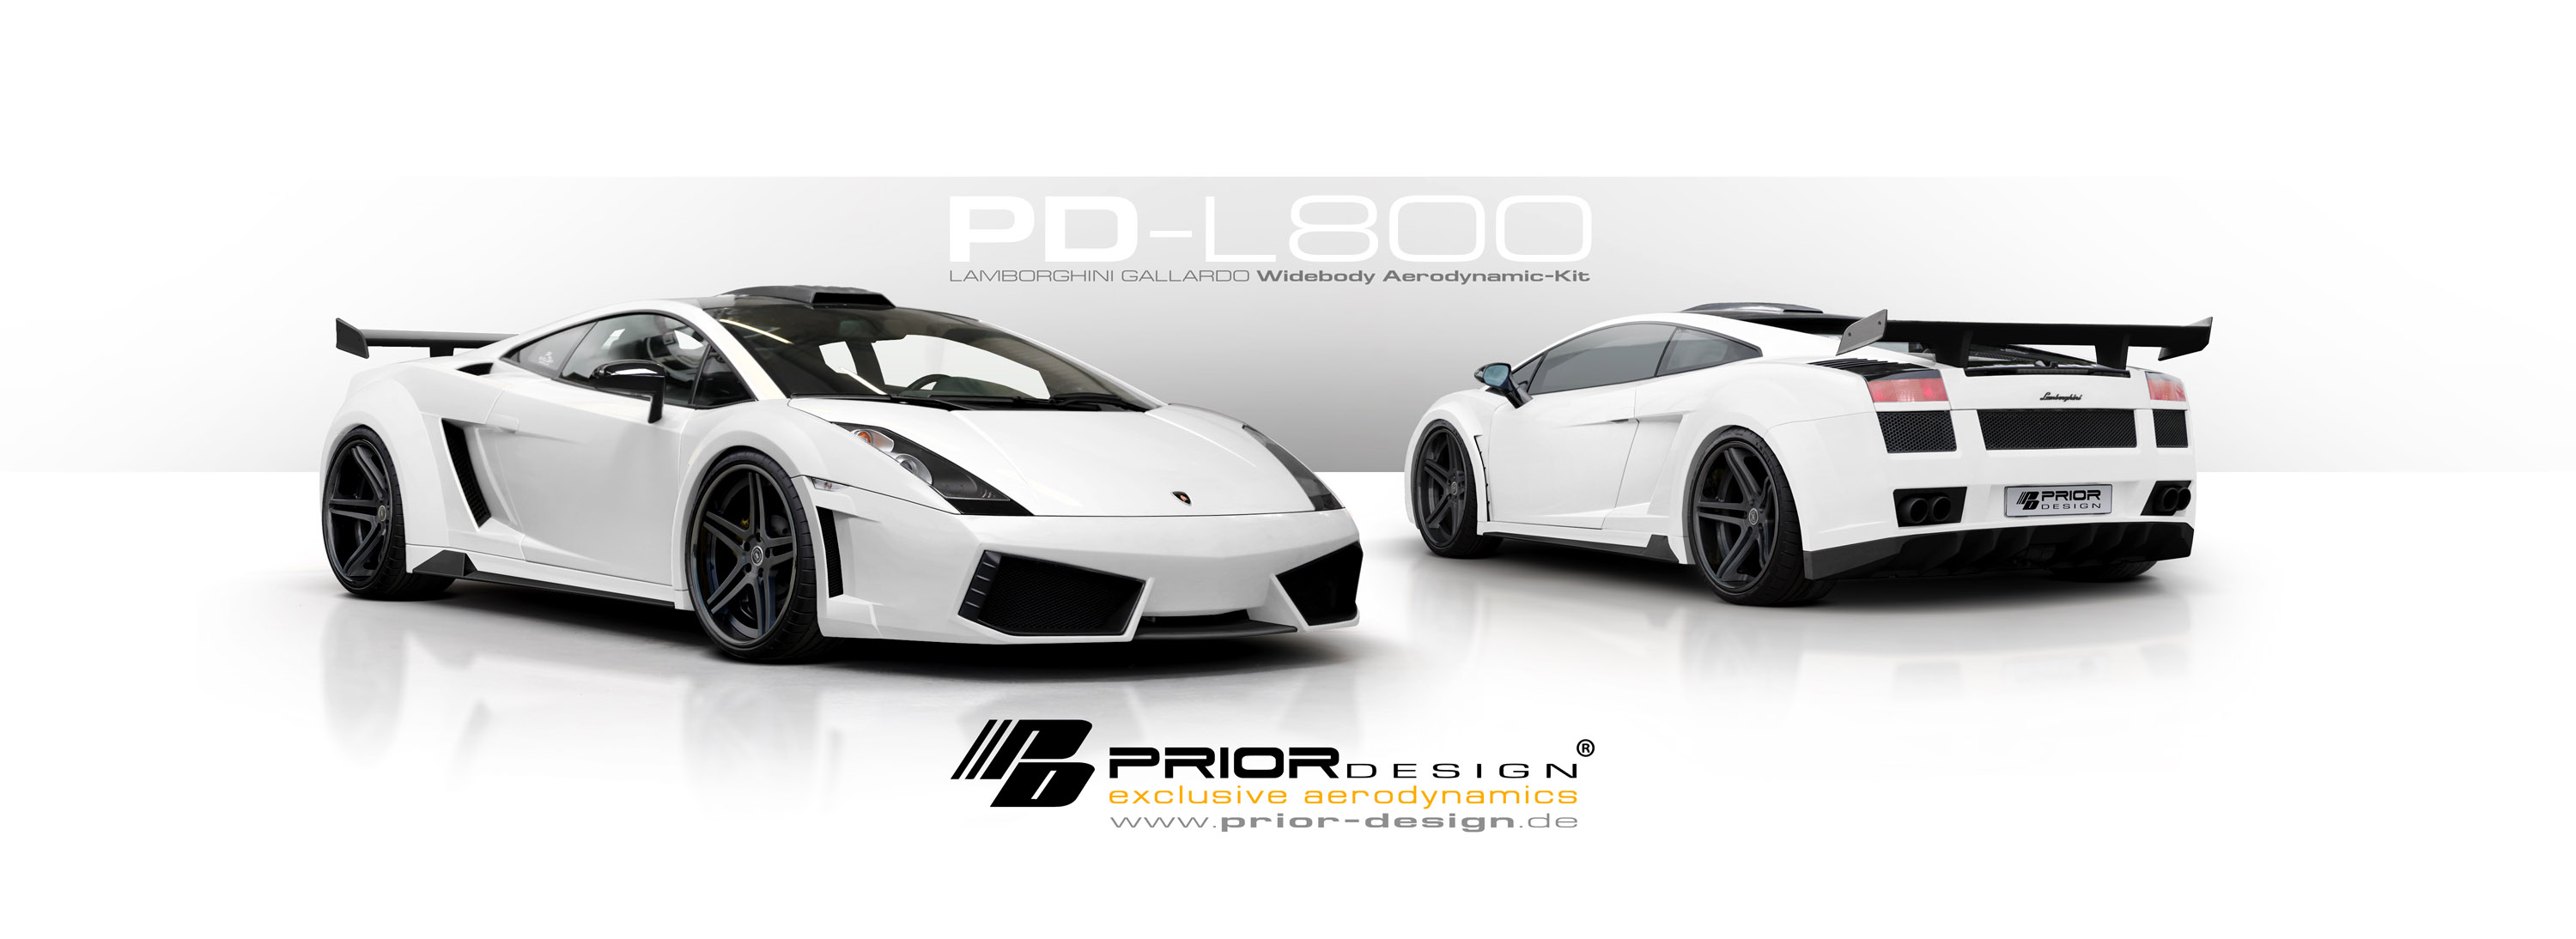 2012, Prior, Design, L800, Lamborghini, Gallardo, Supercar, Supercars Wallpaper